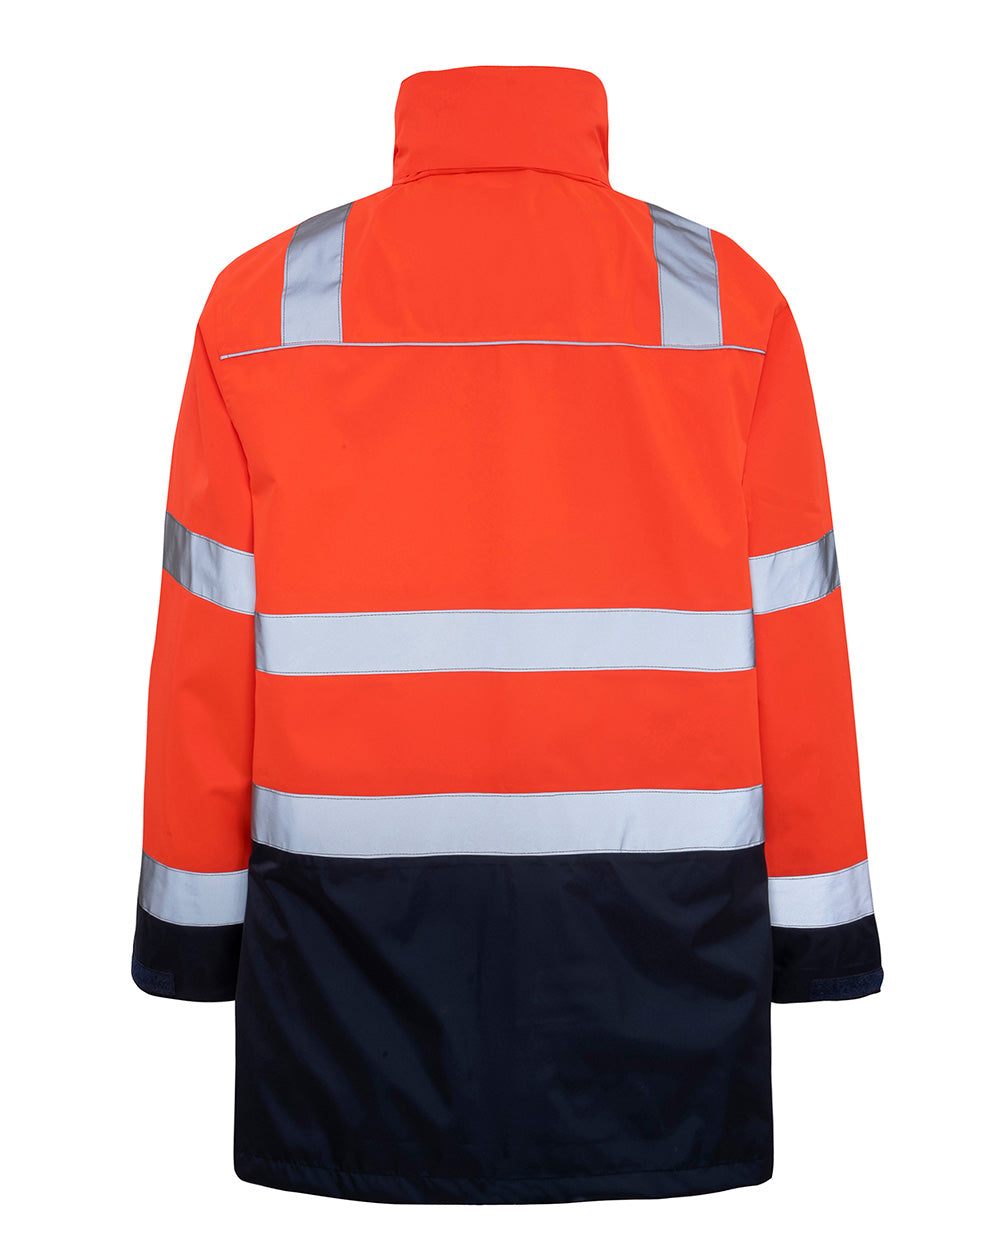 Ultimate Jacket in Fluoro Orange & Navy